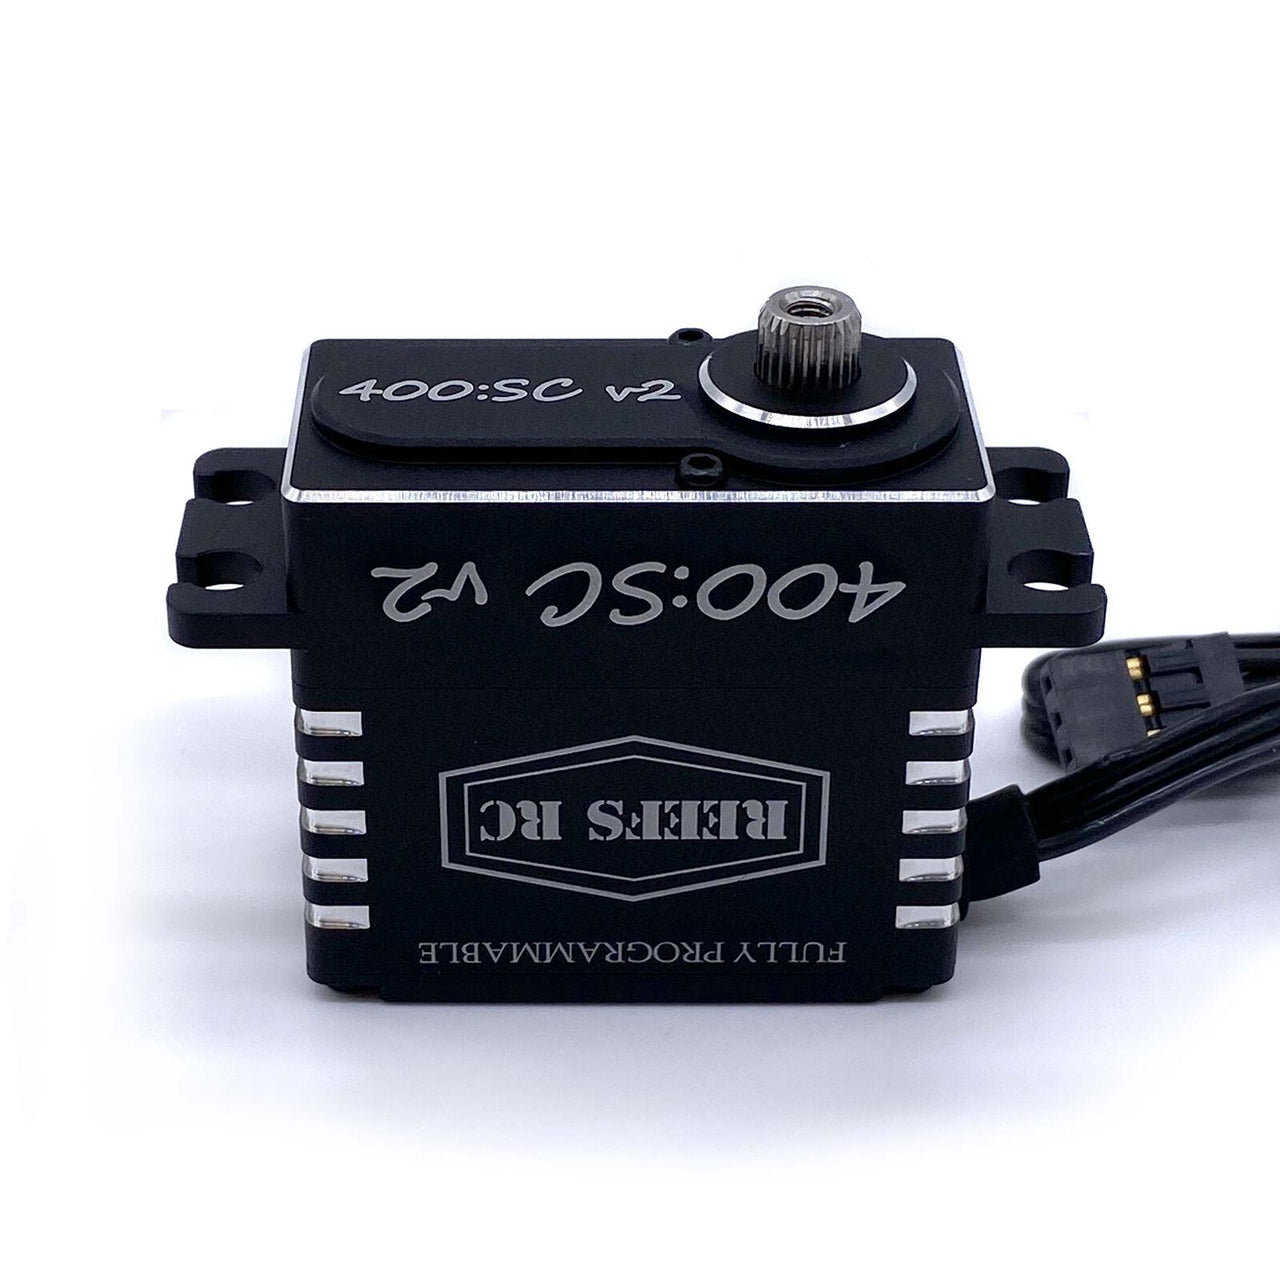 SEHREEFS12 400:SCv2 Racing Servo, Programmable